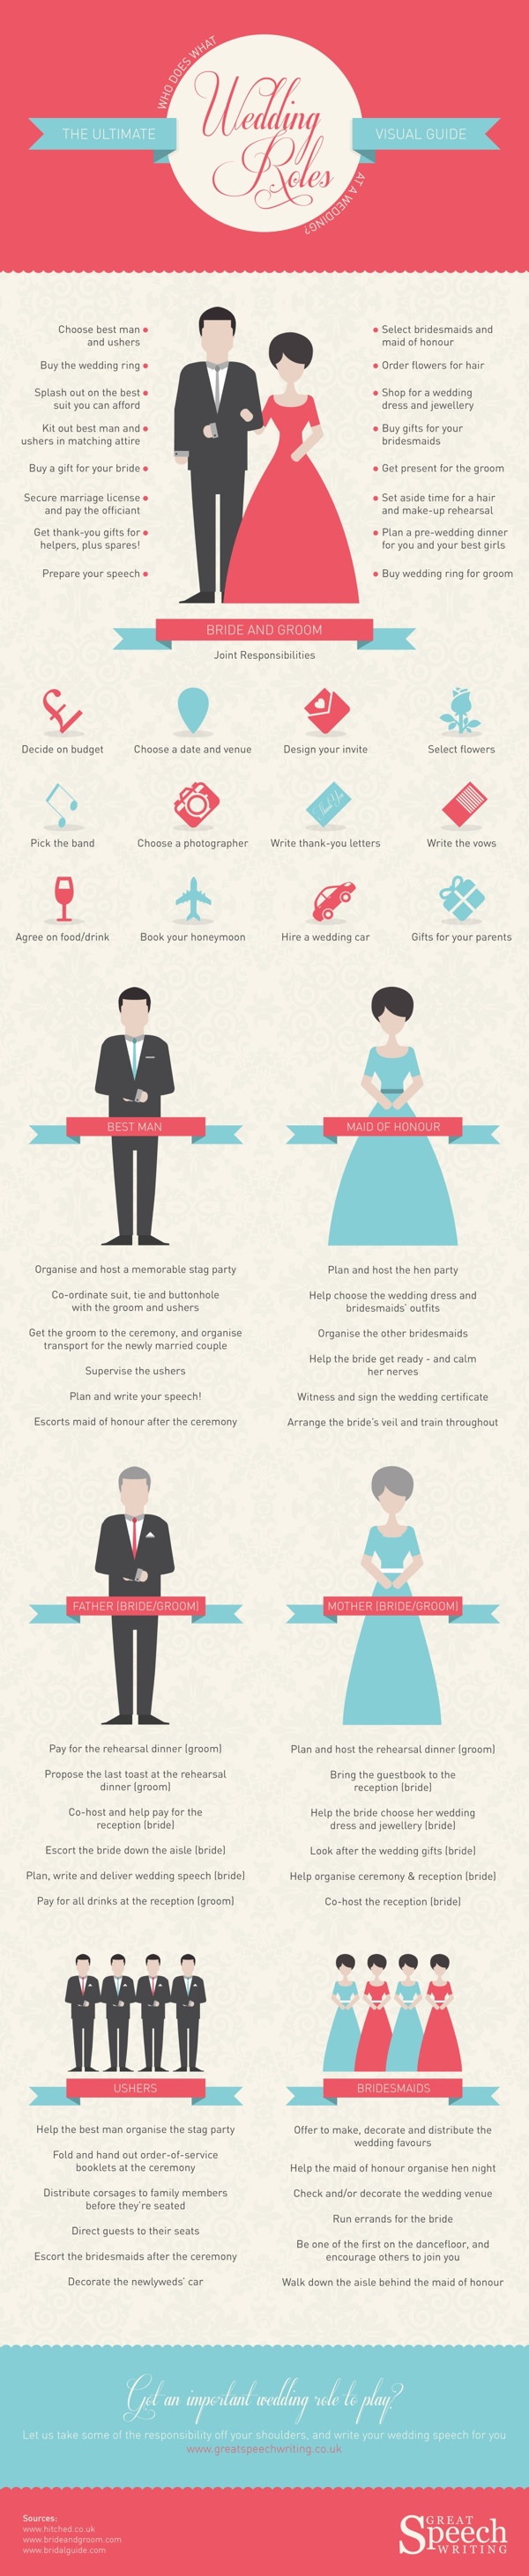 infografia boda